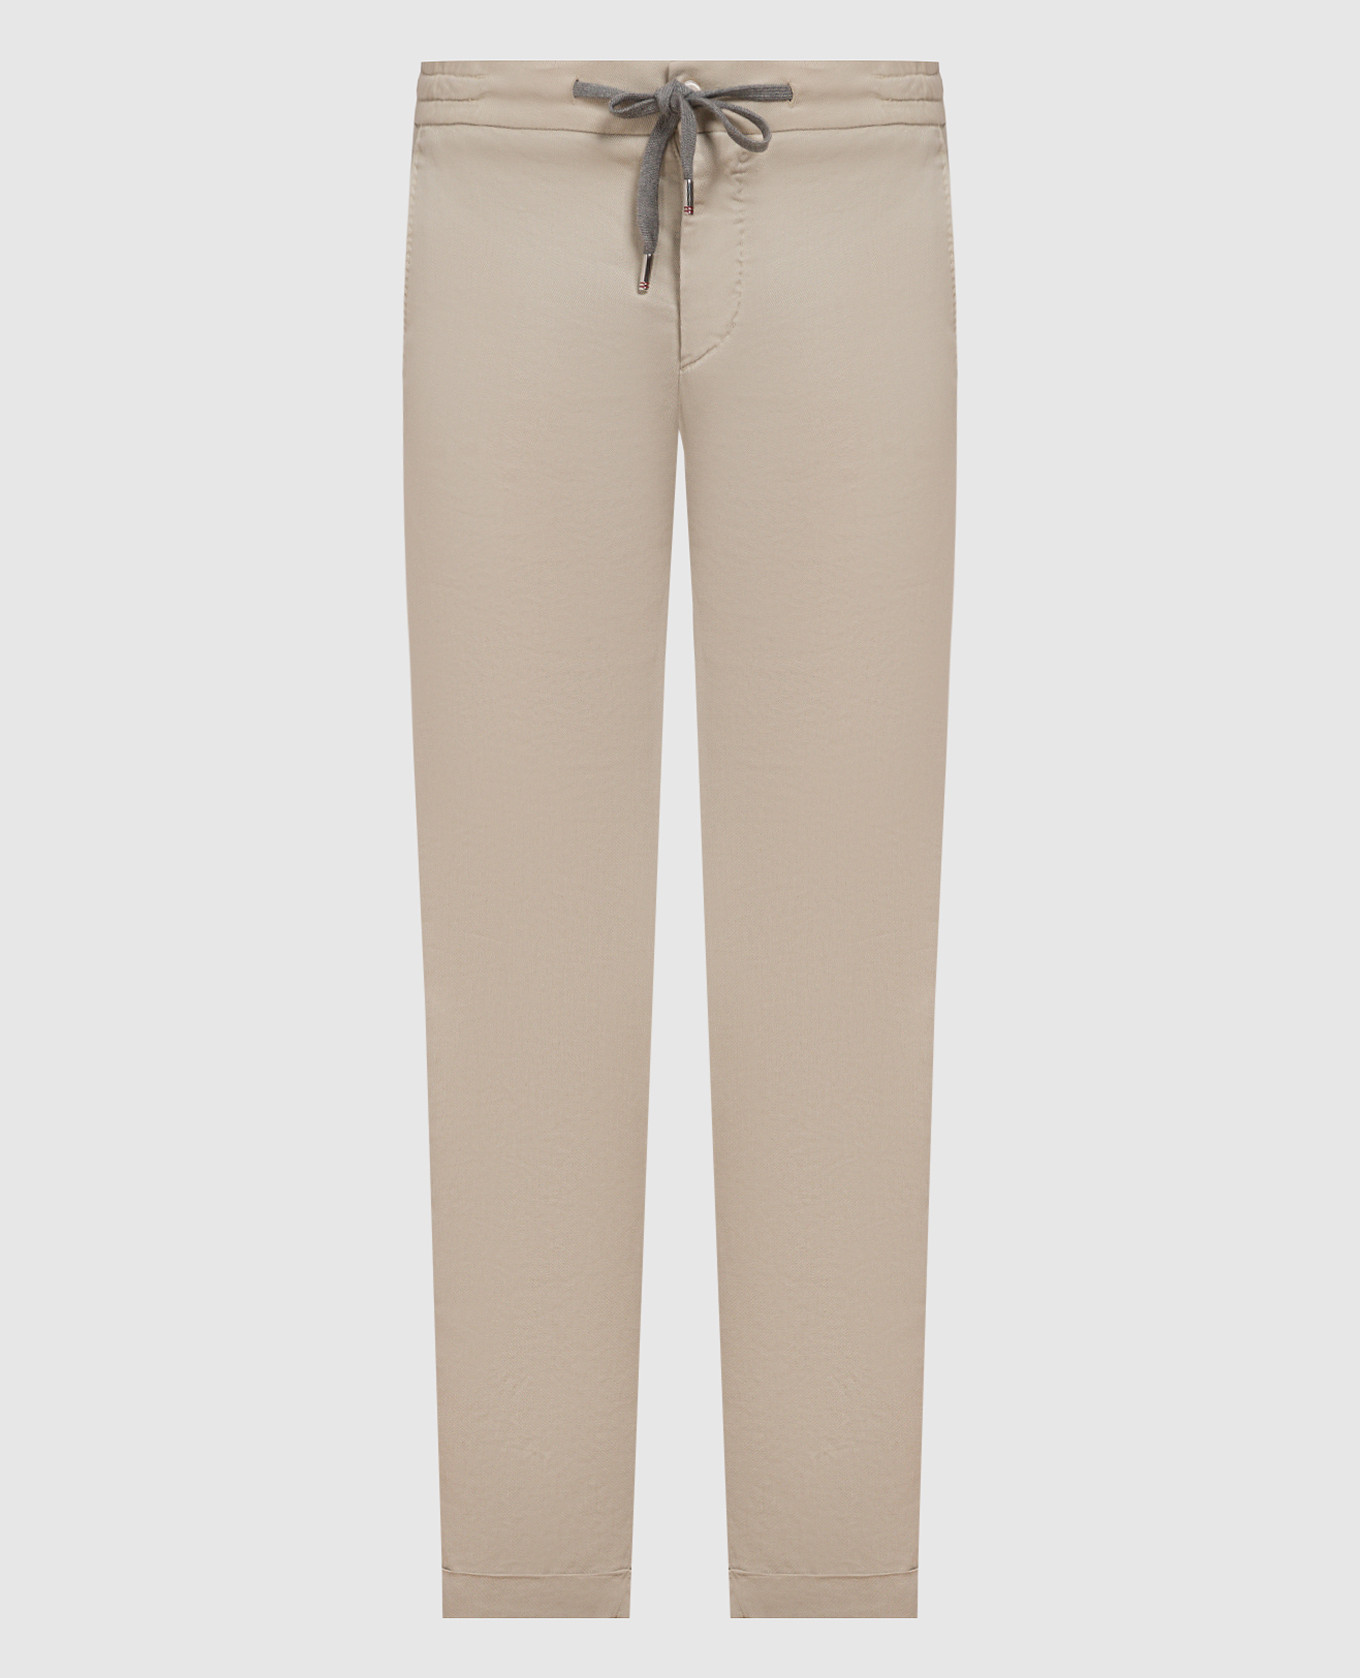 Beige CARACCIOLO pants with linen